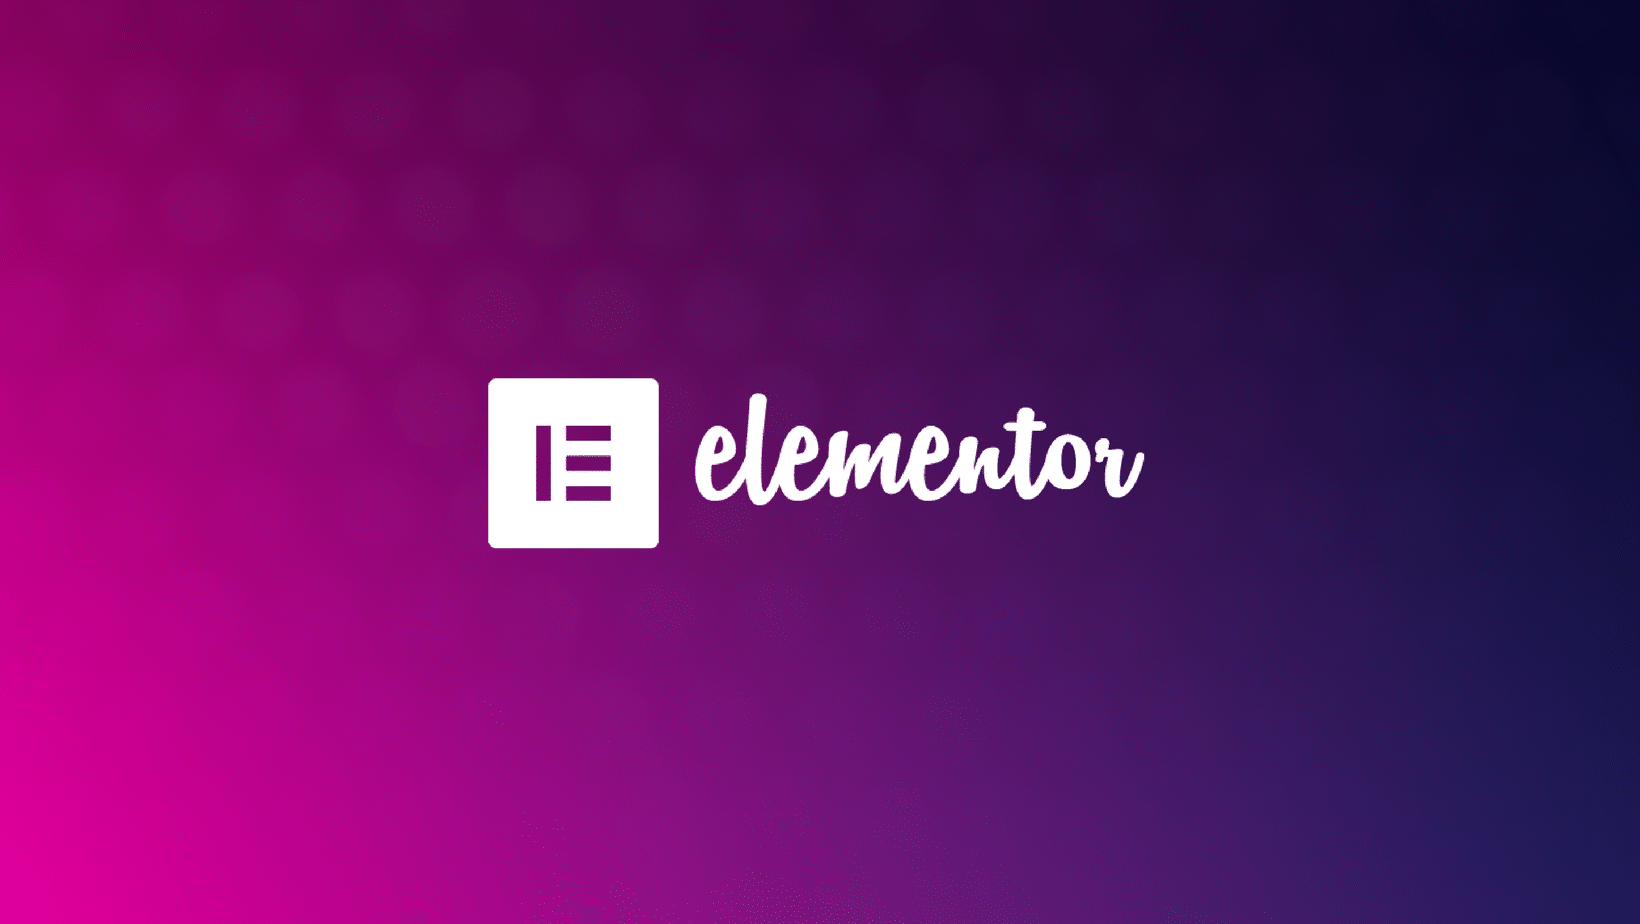 elementor templates